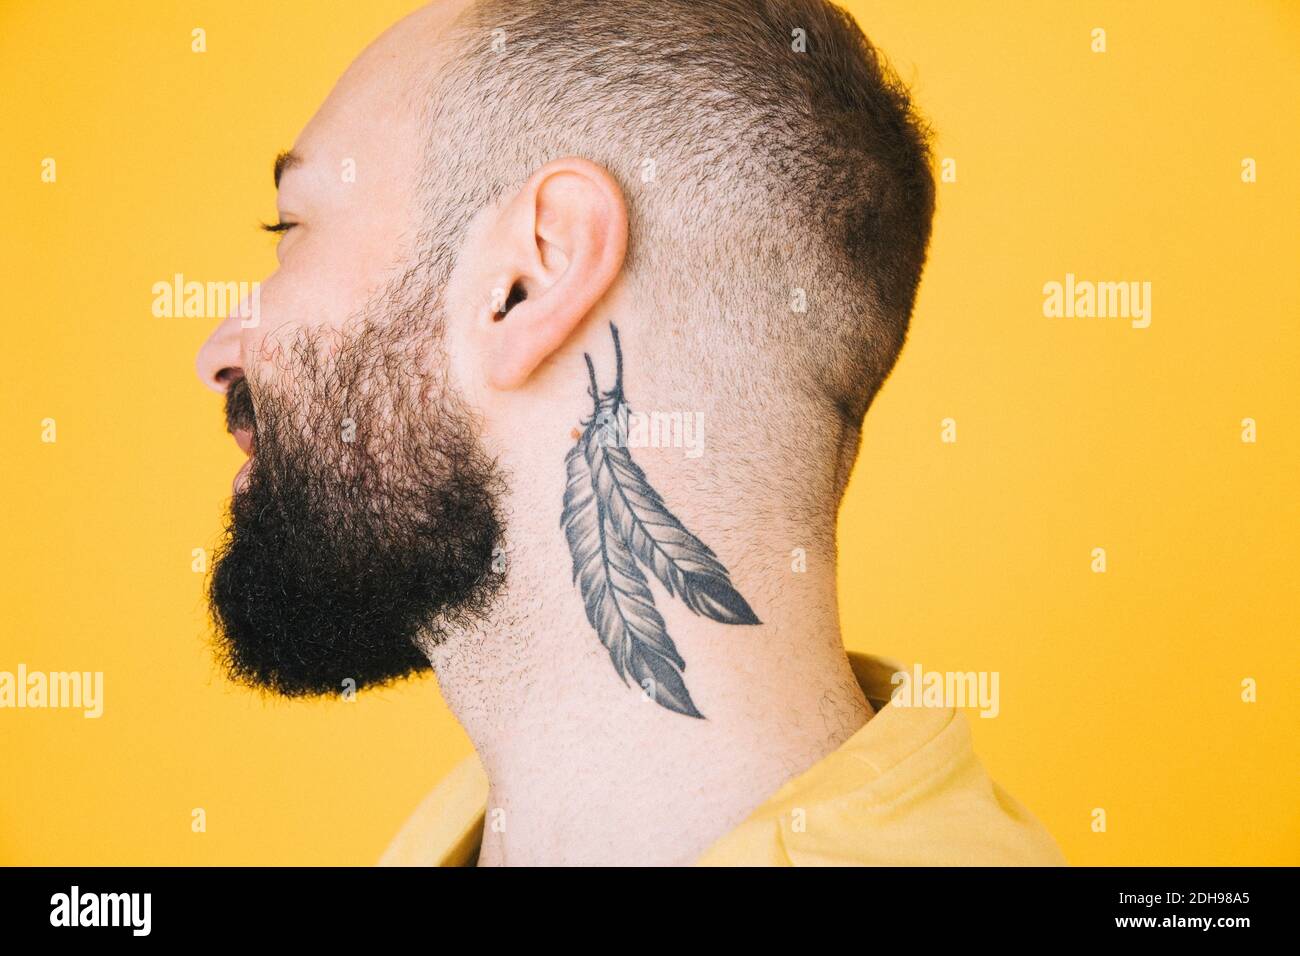 Flügel hals tattoo männer Flügel tattoo